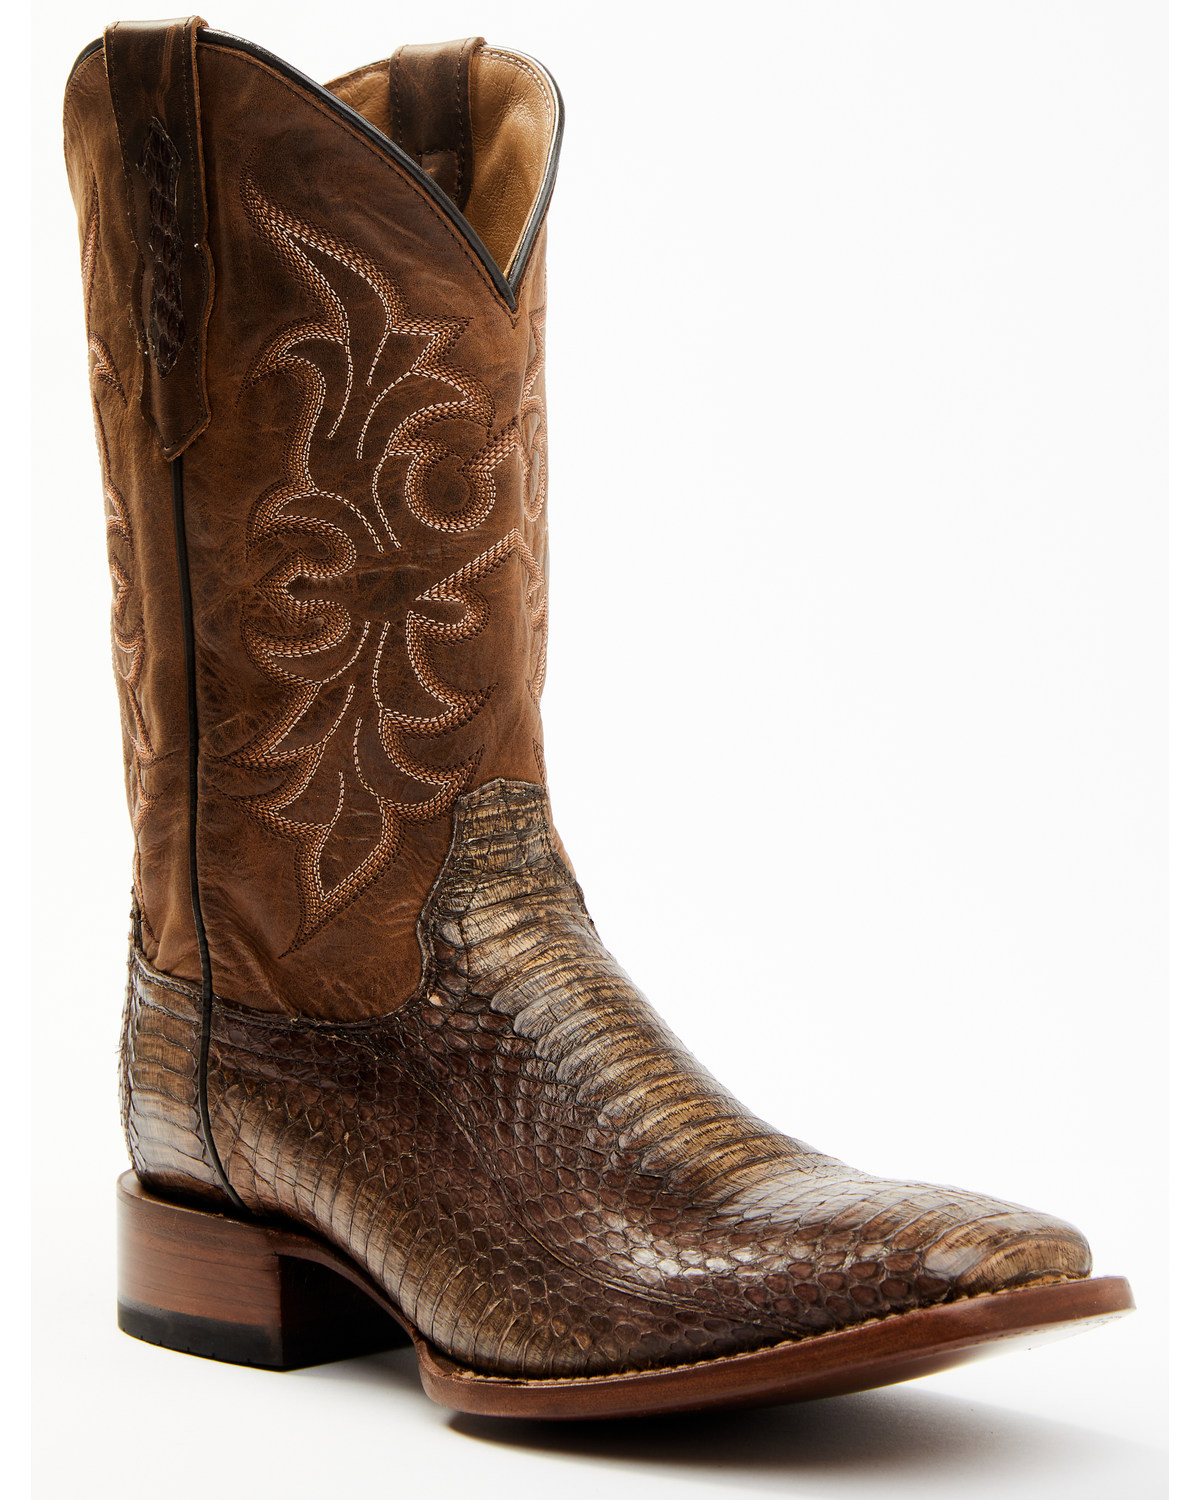 Cody James Men's Cobra Brown Exotic Western Boots - Broad Square Toe